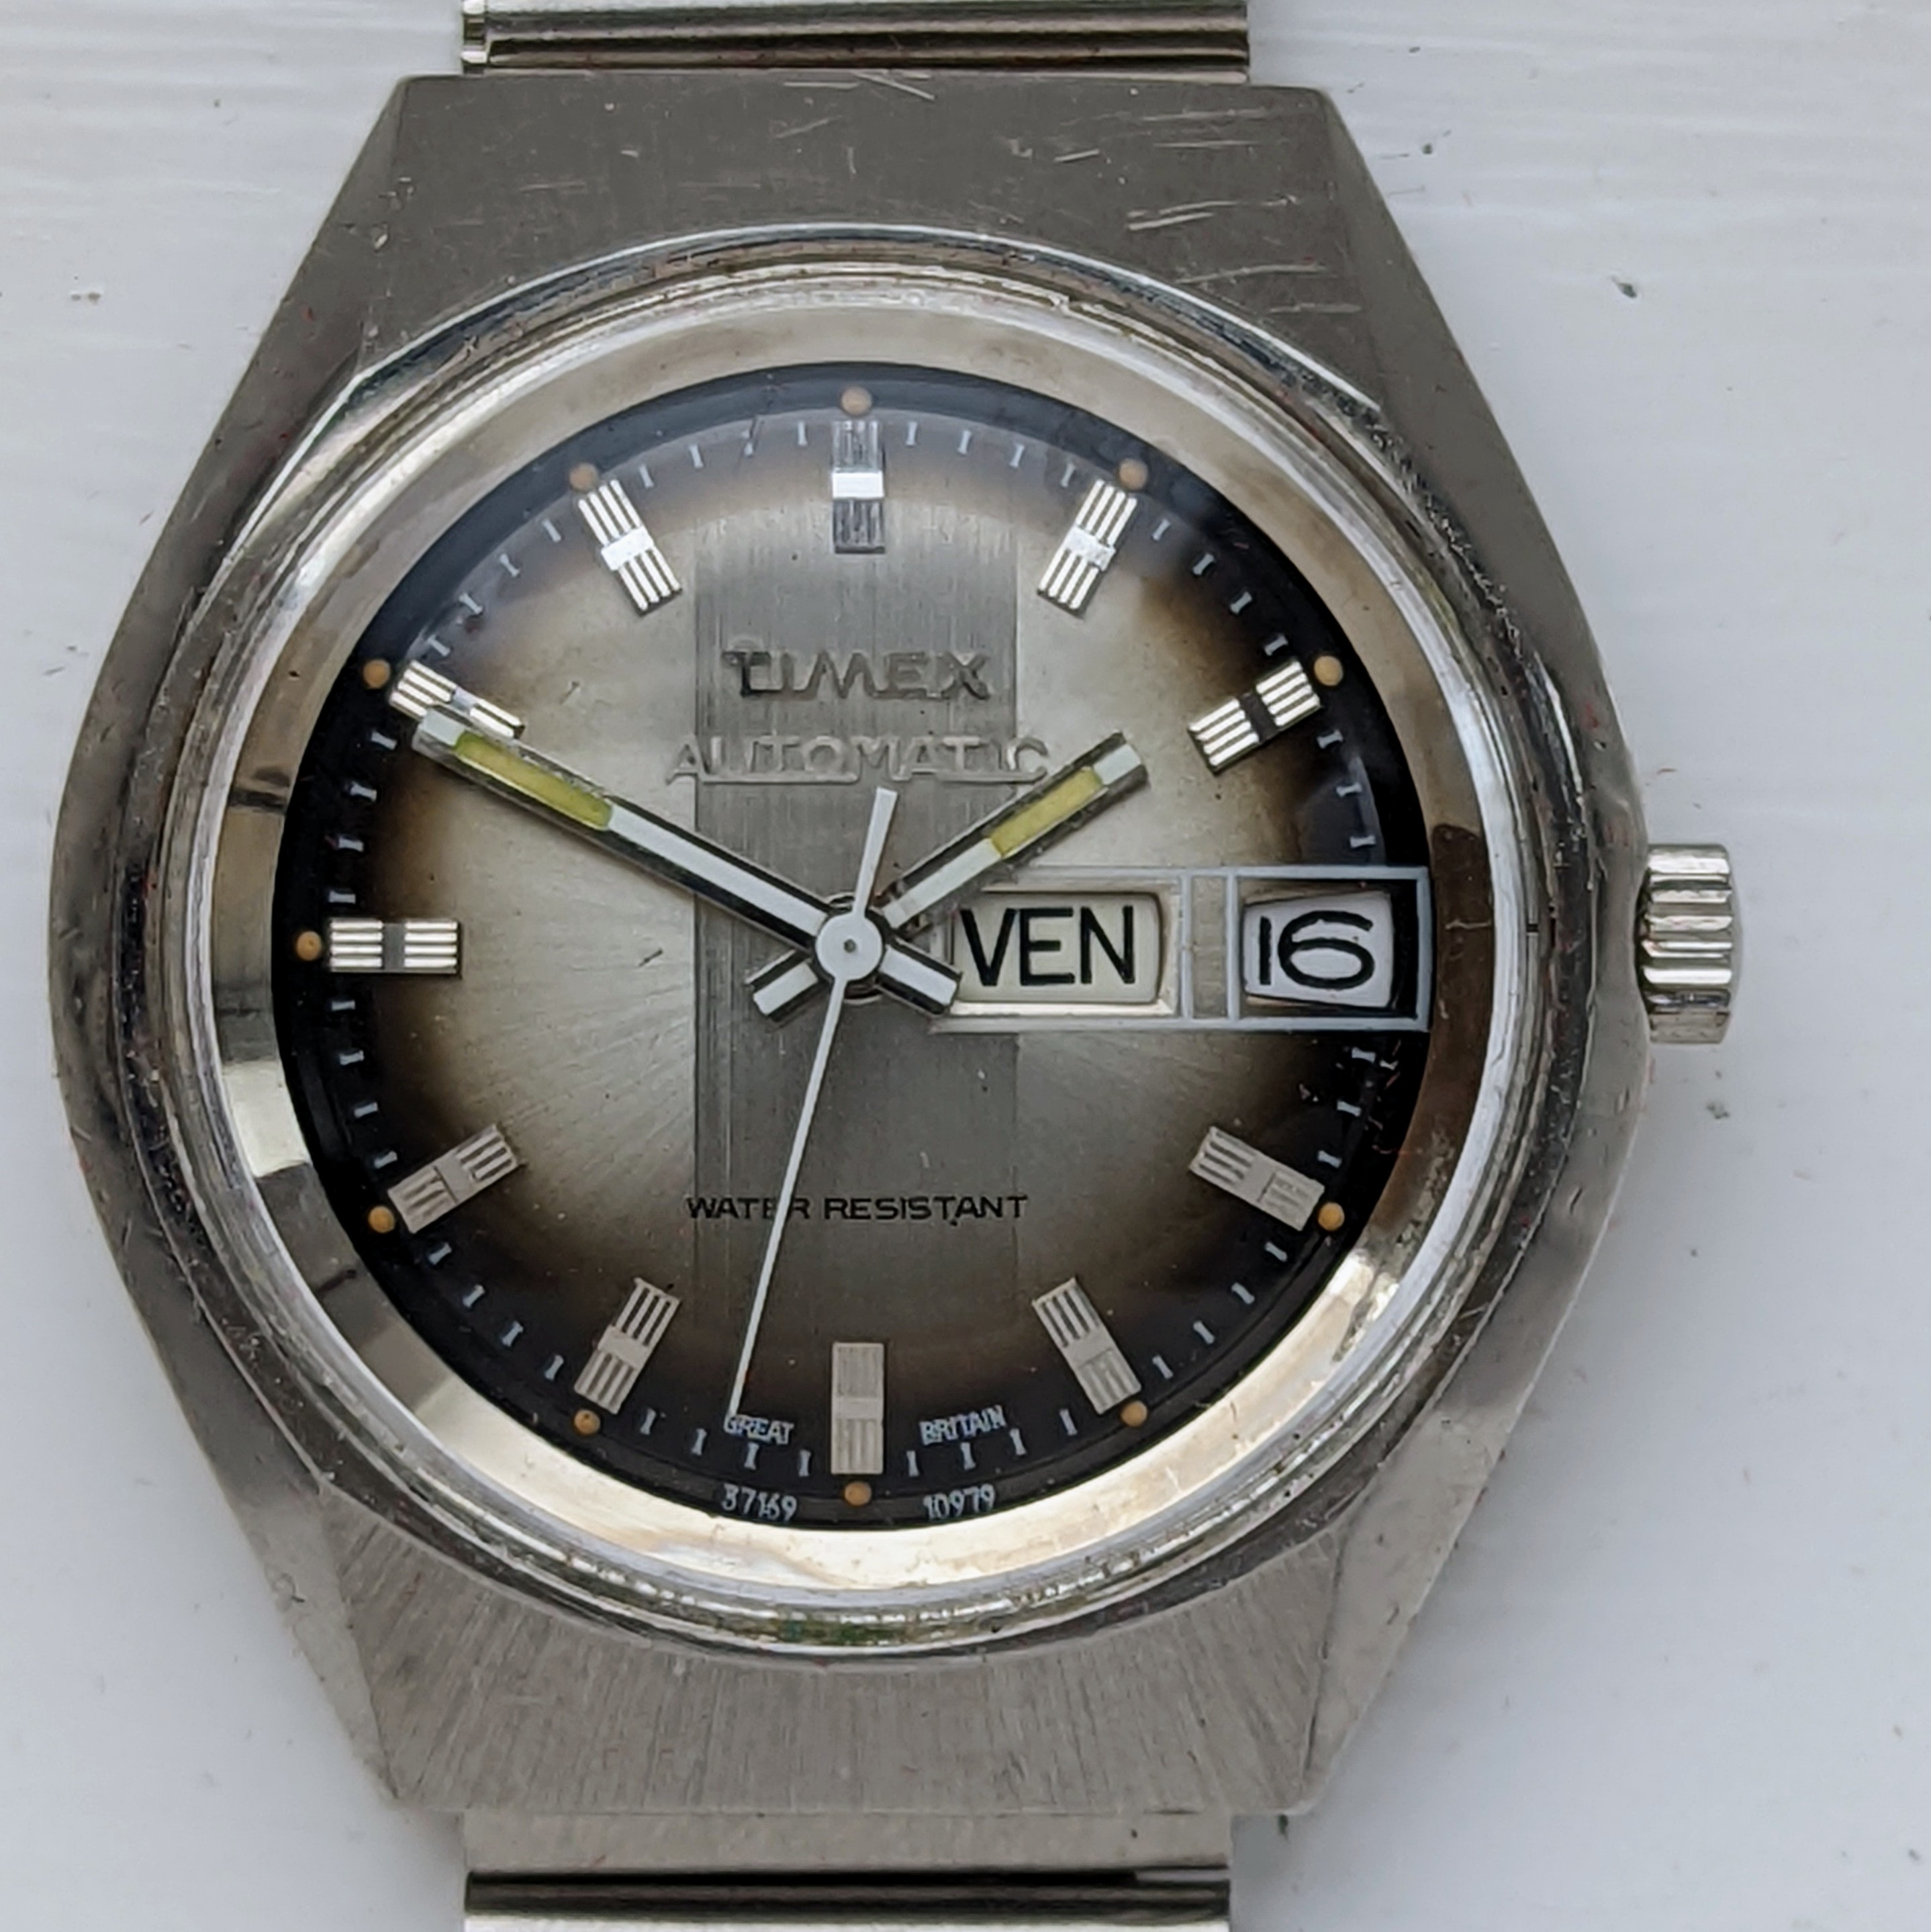 Timex Viscount 37169 10979 [1979]